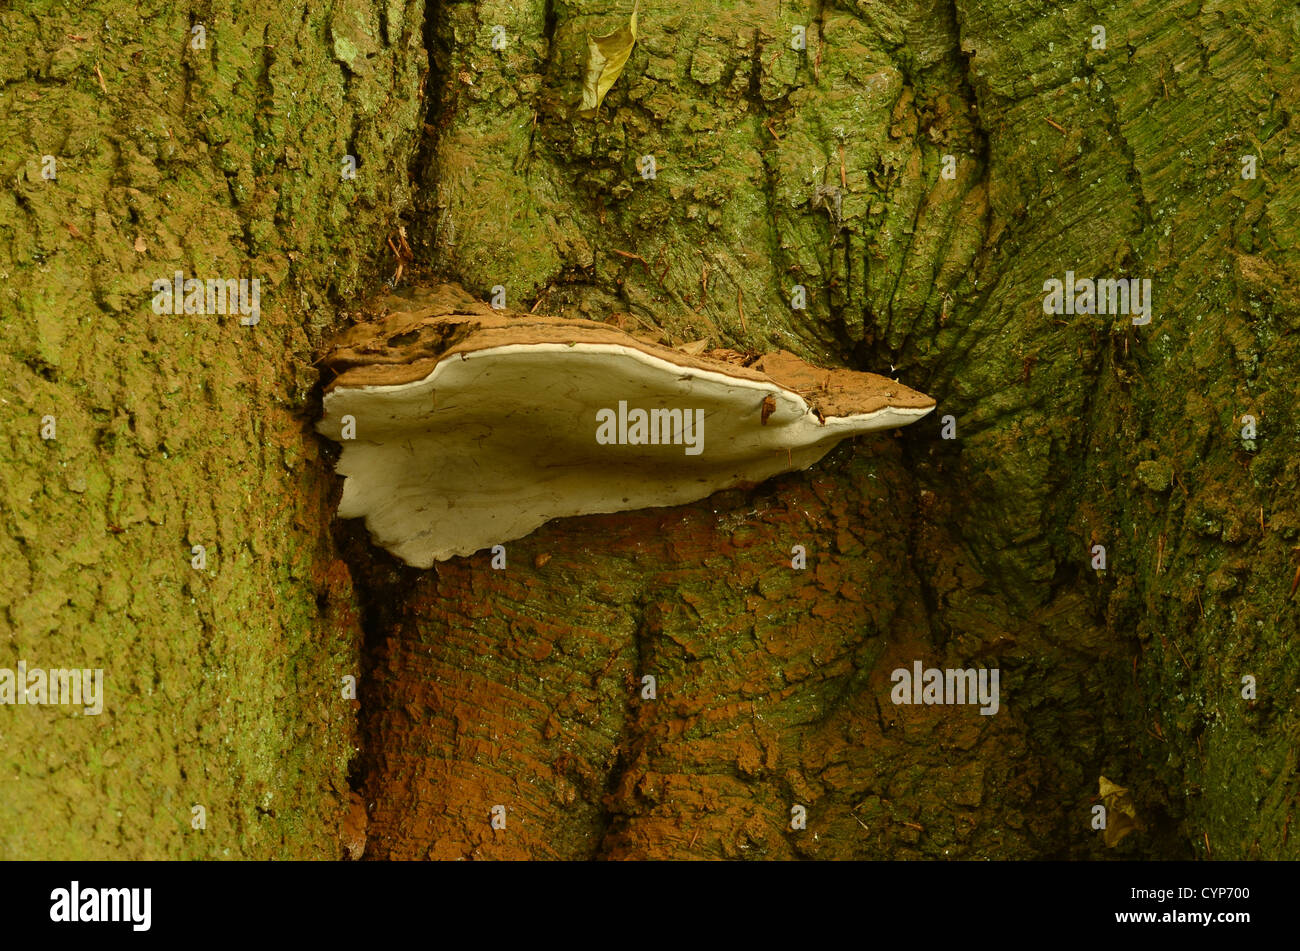 Shelf Fungi growing on living tree Stock Photo